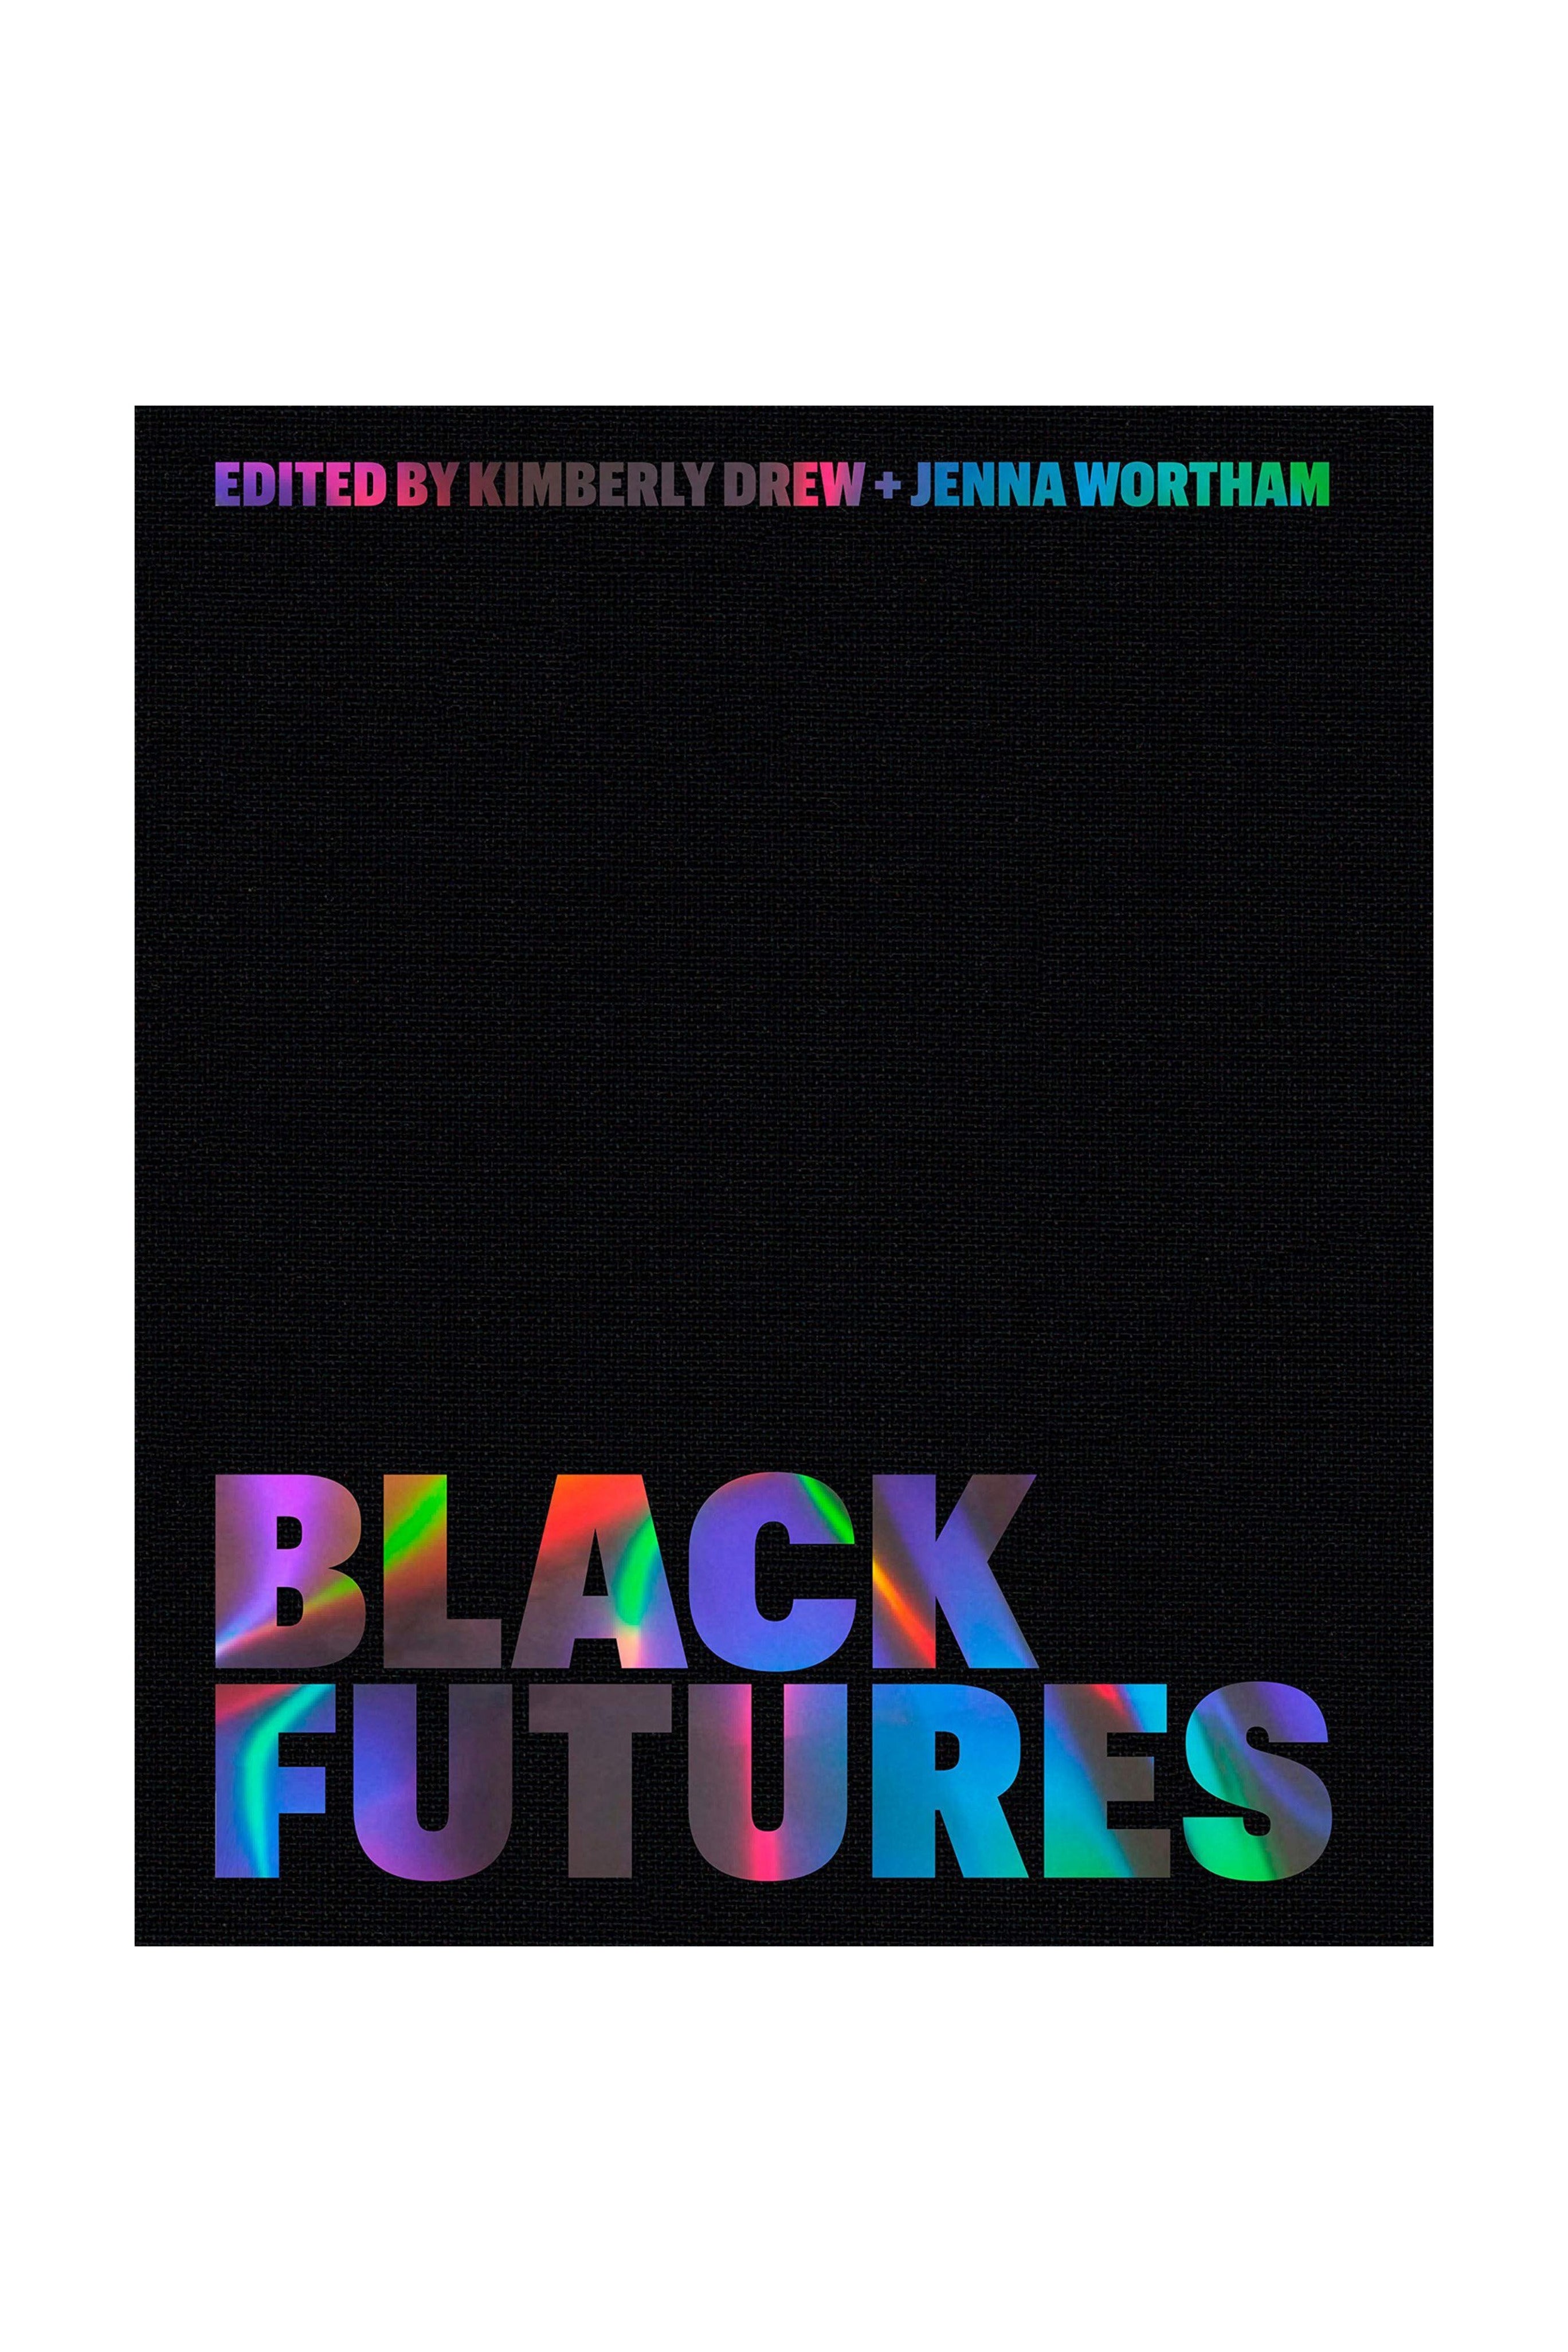 "Black Futures One World" Book by Kimberly Drew and Jenna Wortham